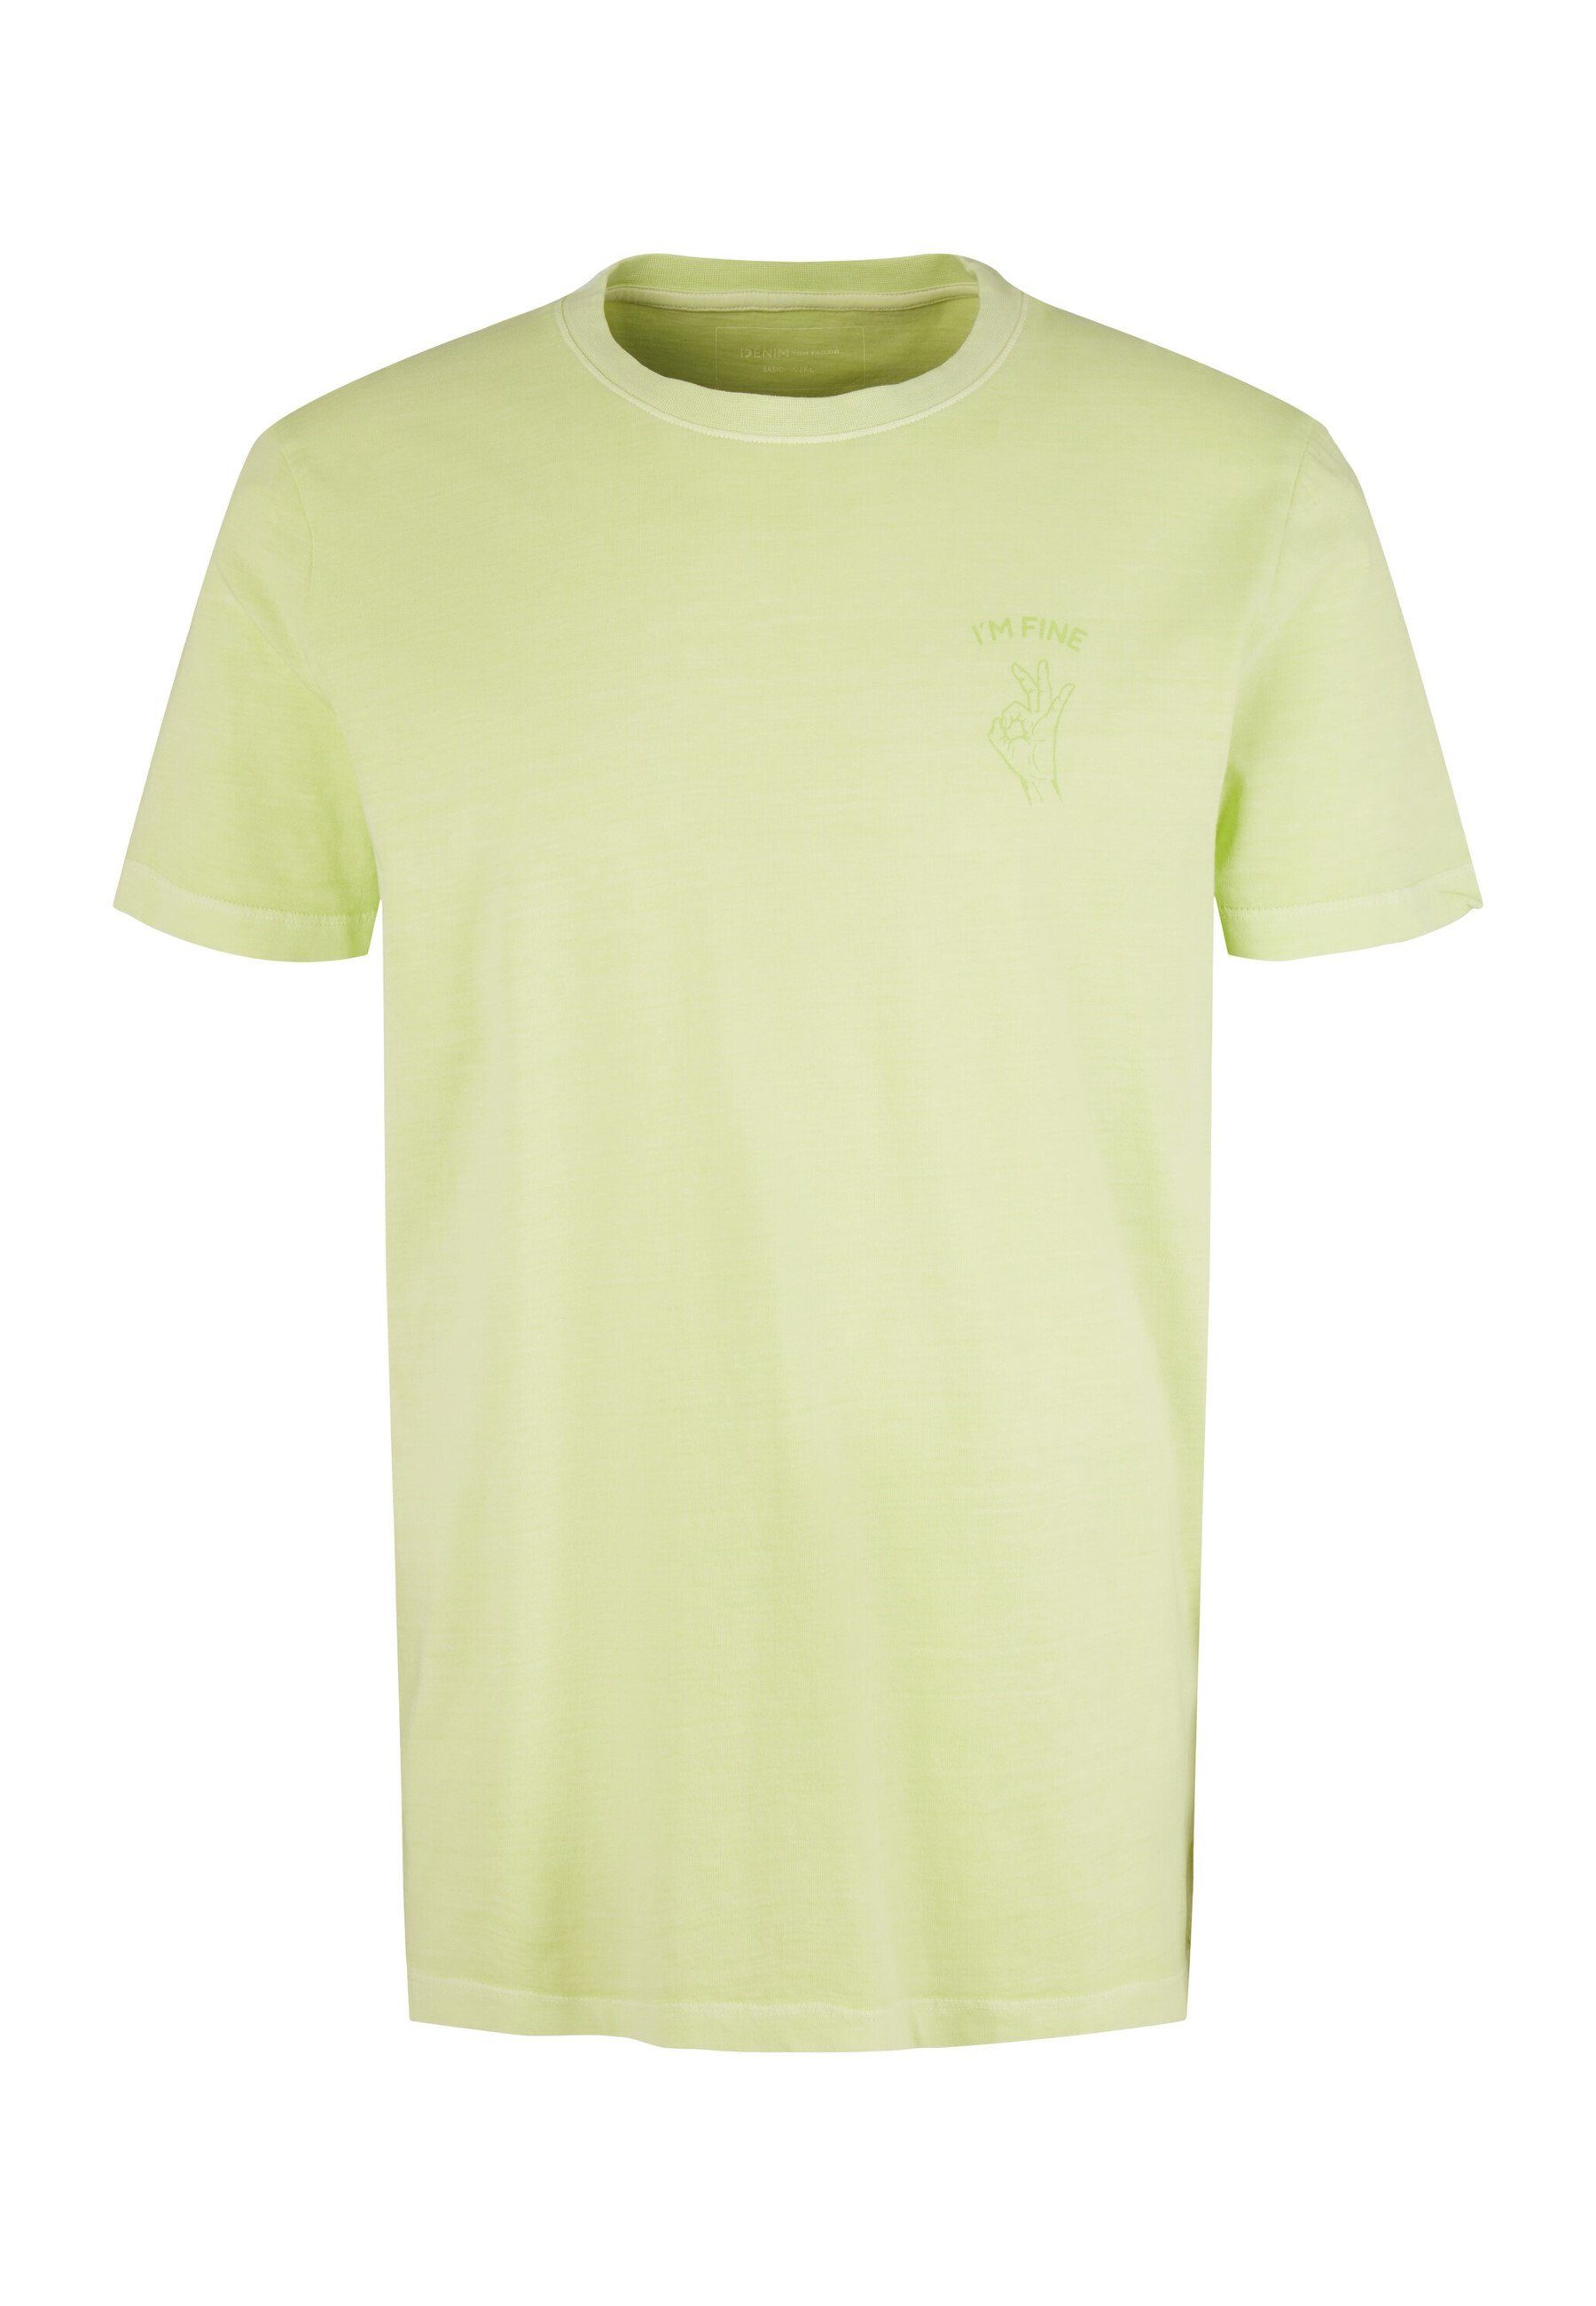 Kurzarmshirt grün Rundhals T-Shirt TAILOR TOM Printed T-Shirt